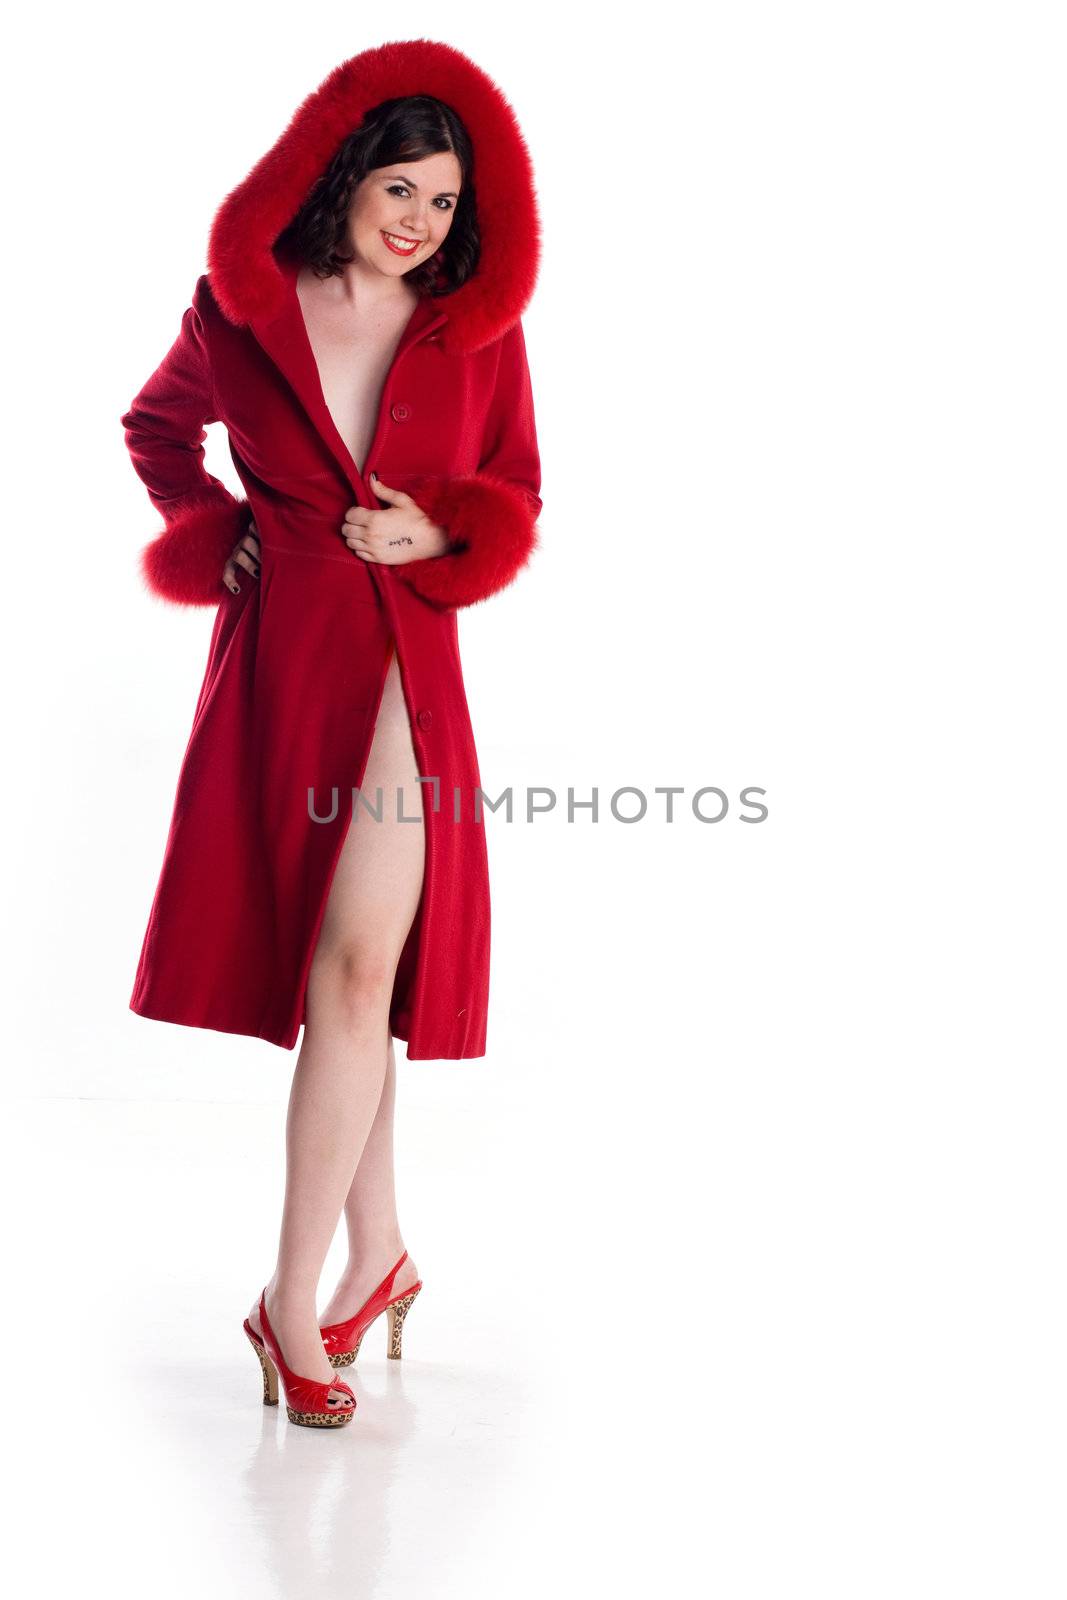 Cute girl in pin-up pose in red fur coat by krazeedrocks